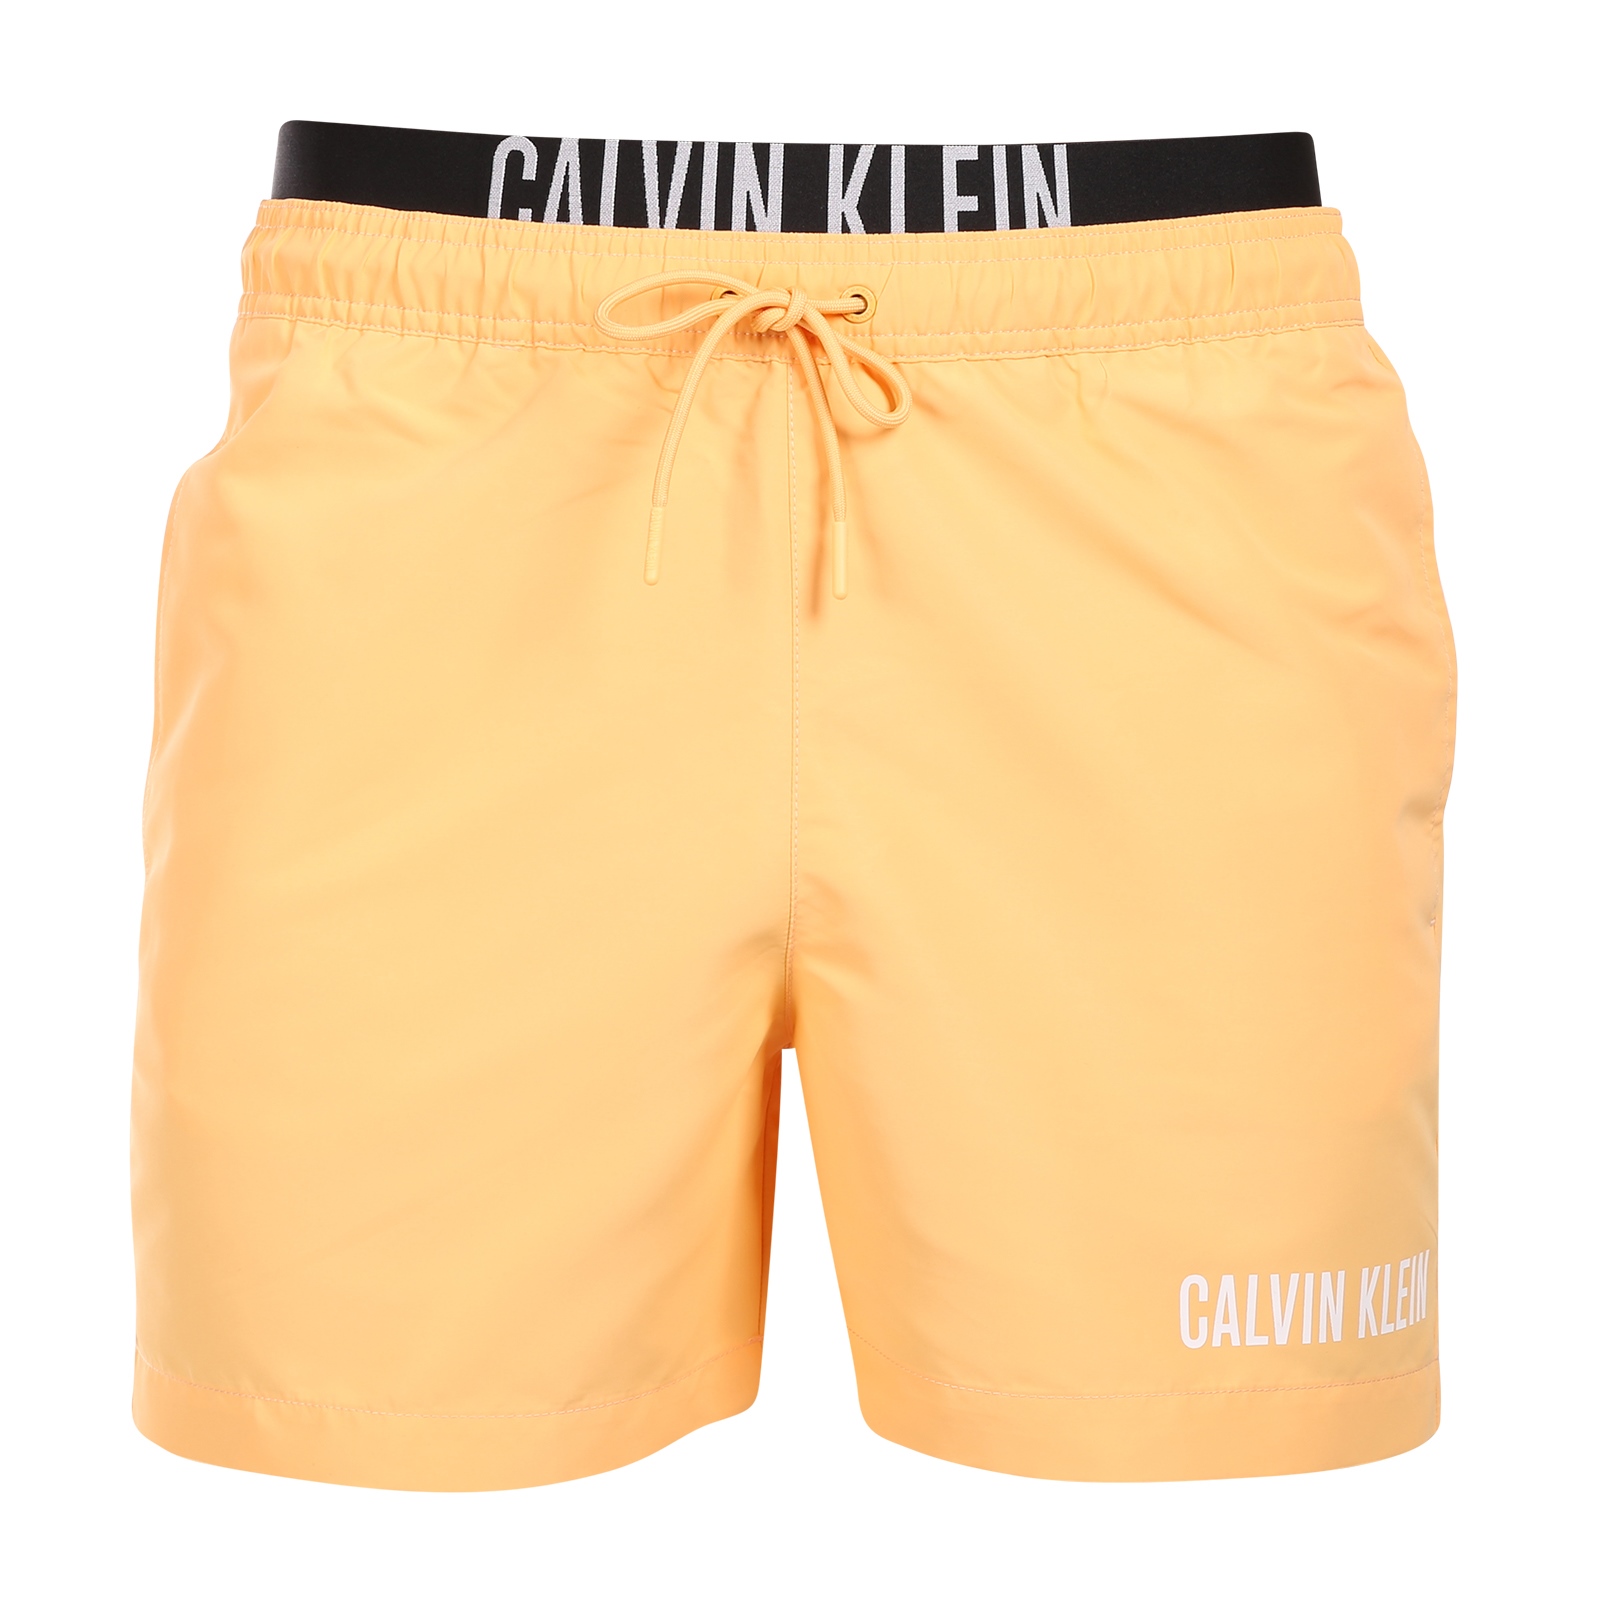 E-shop Pánské plavky Calvin Klein oranžové